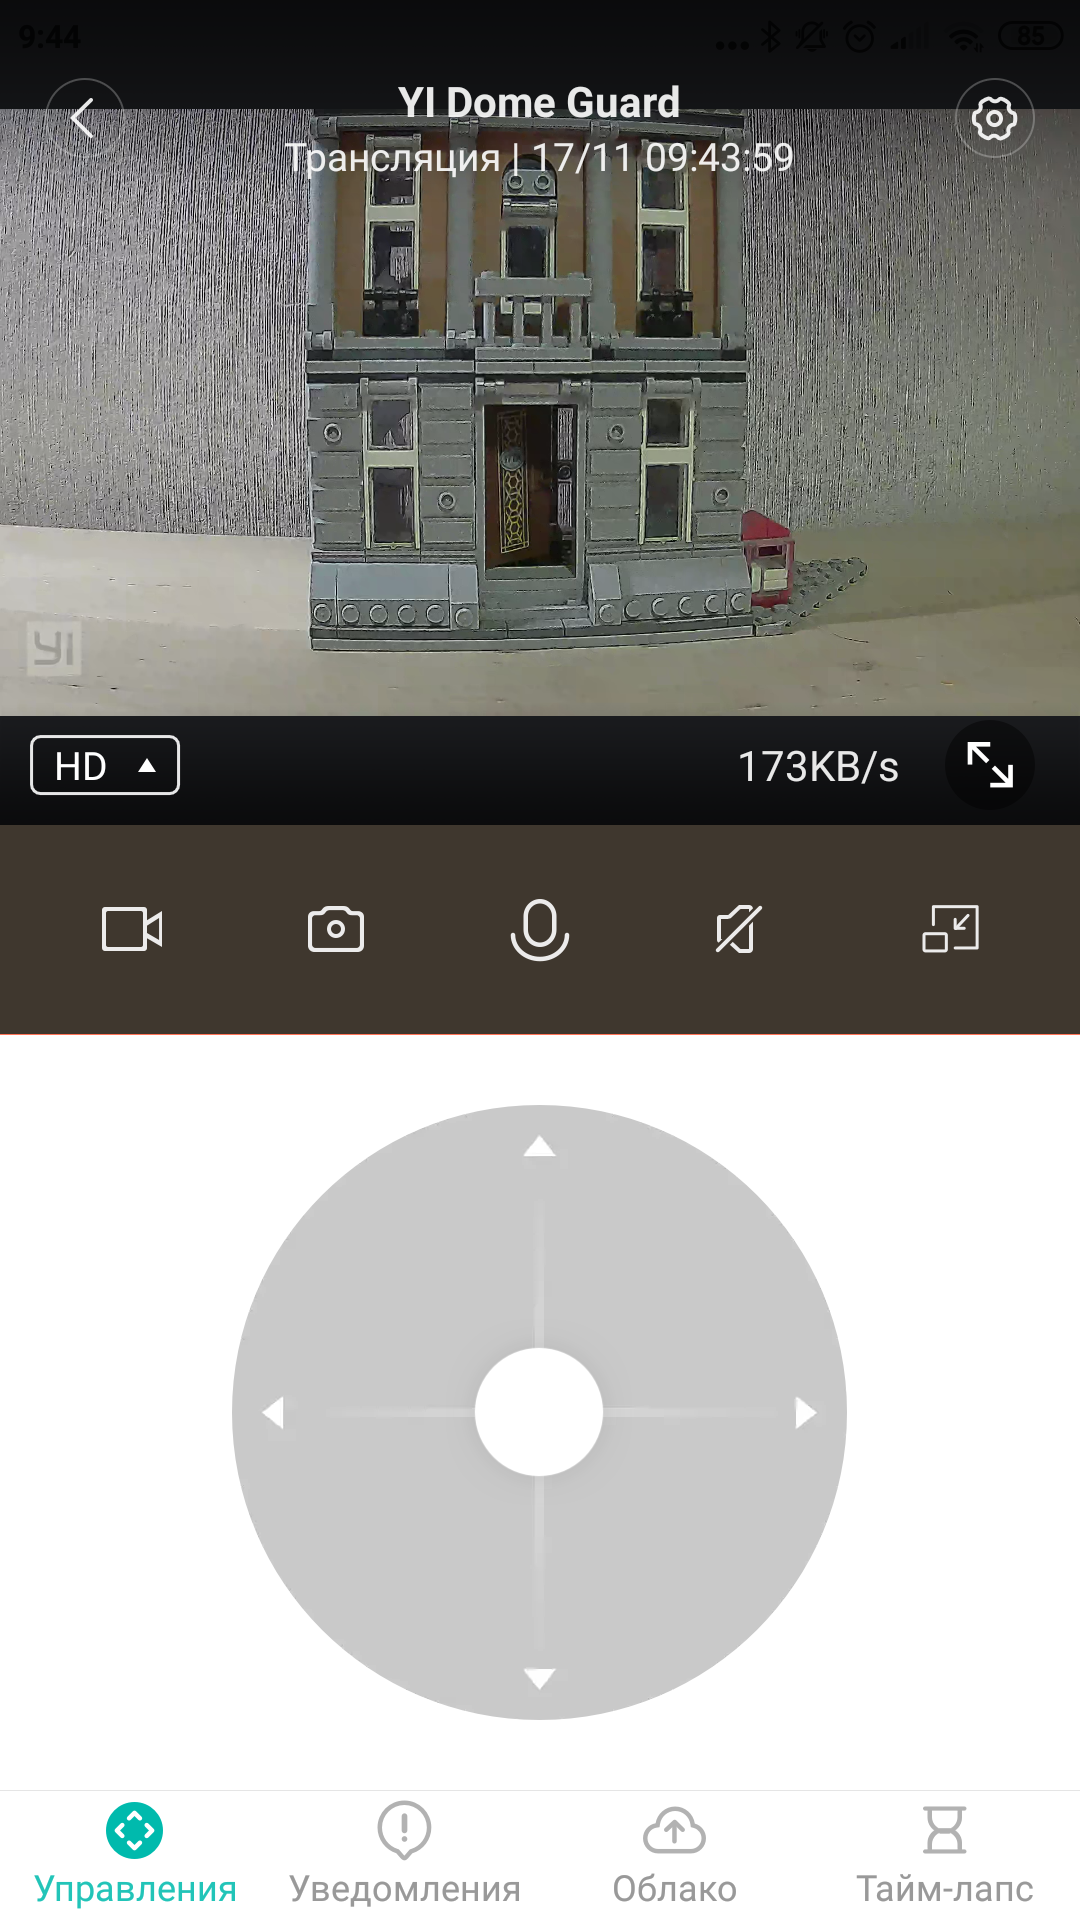 Обзор YI Dome Guard: купольная IP-камера за $25-32